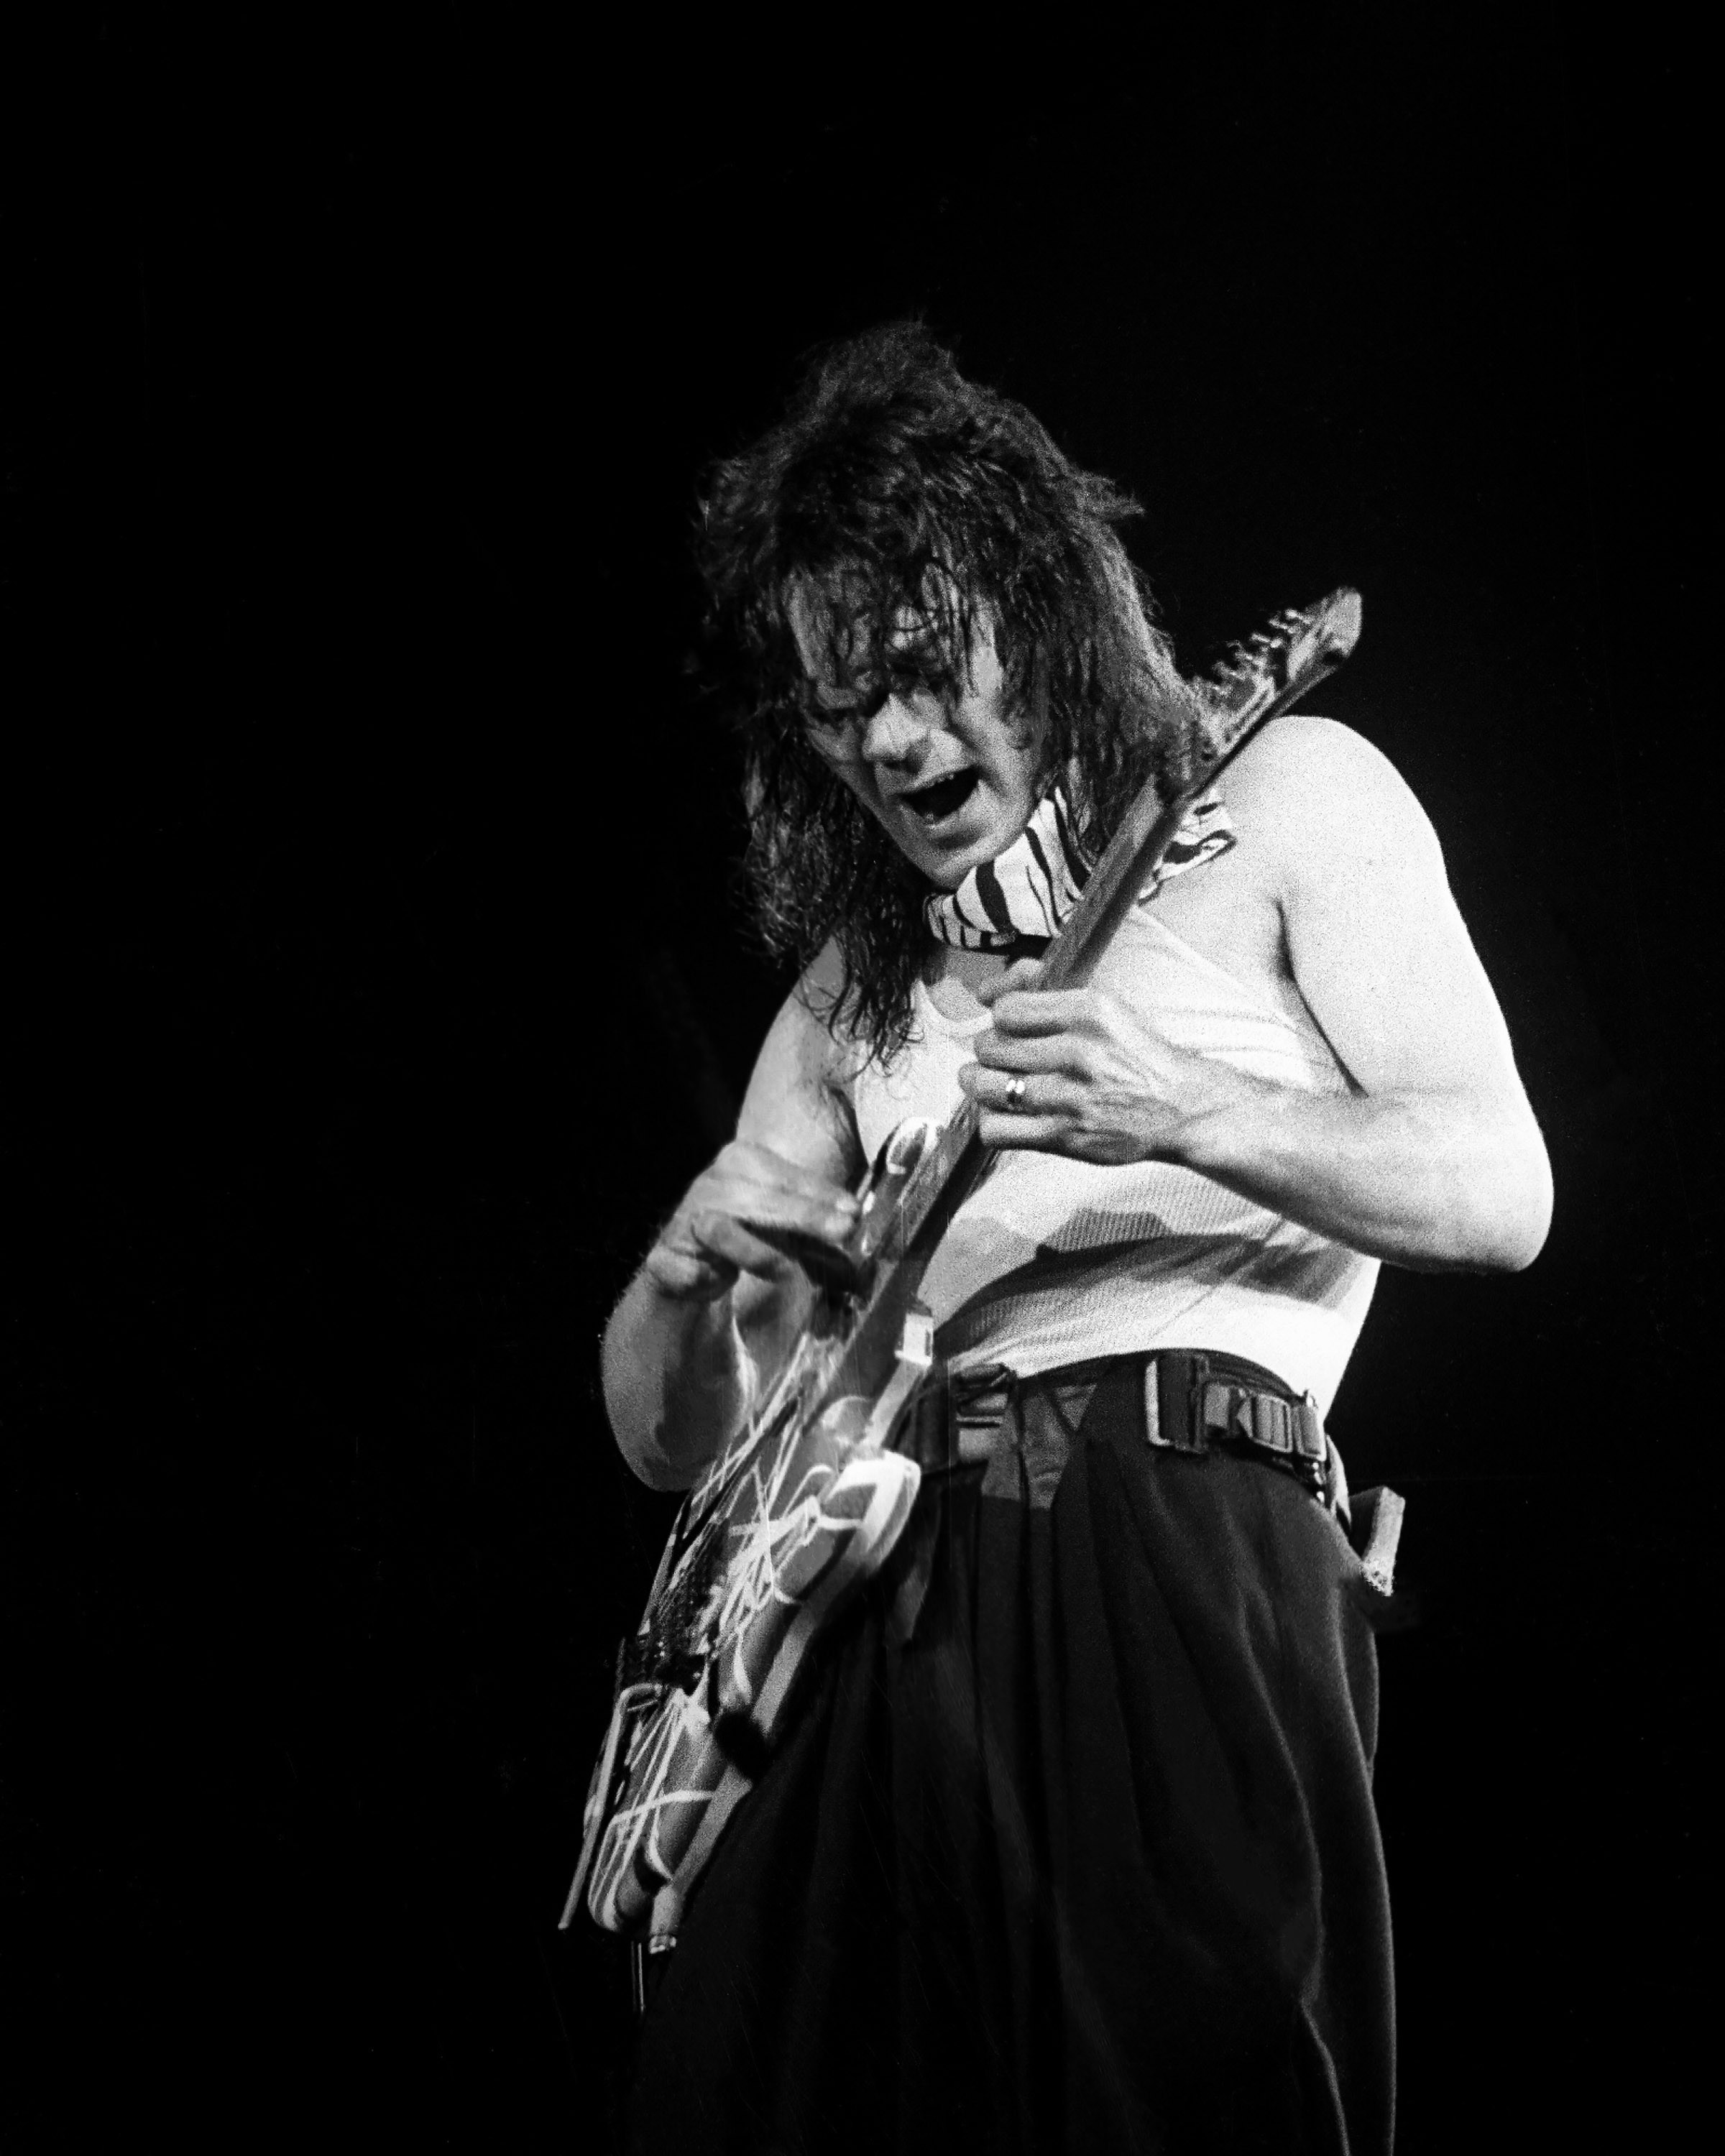  Eddie Van Halen (Foto: Getty Images)